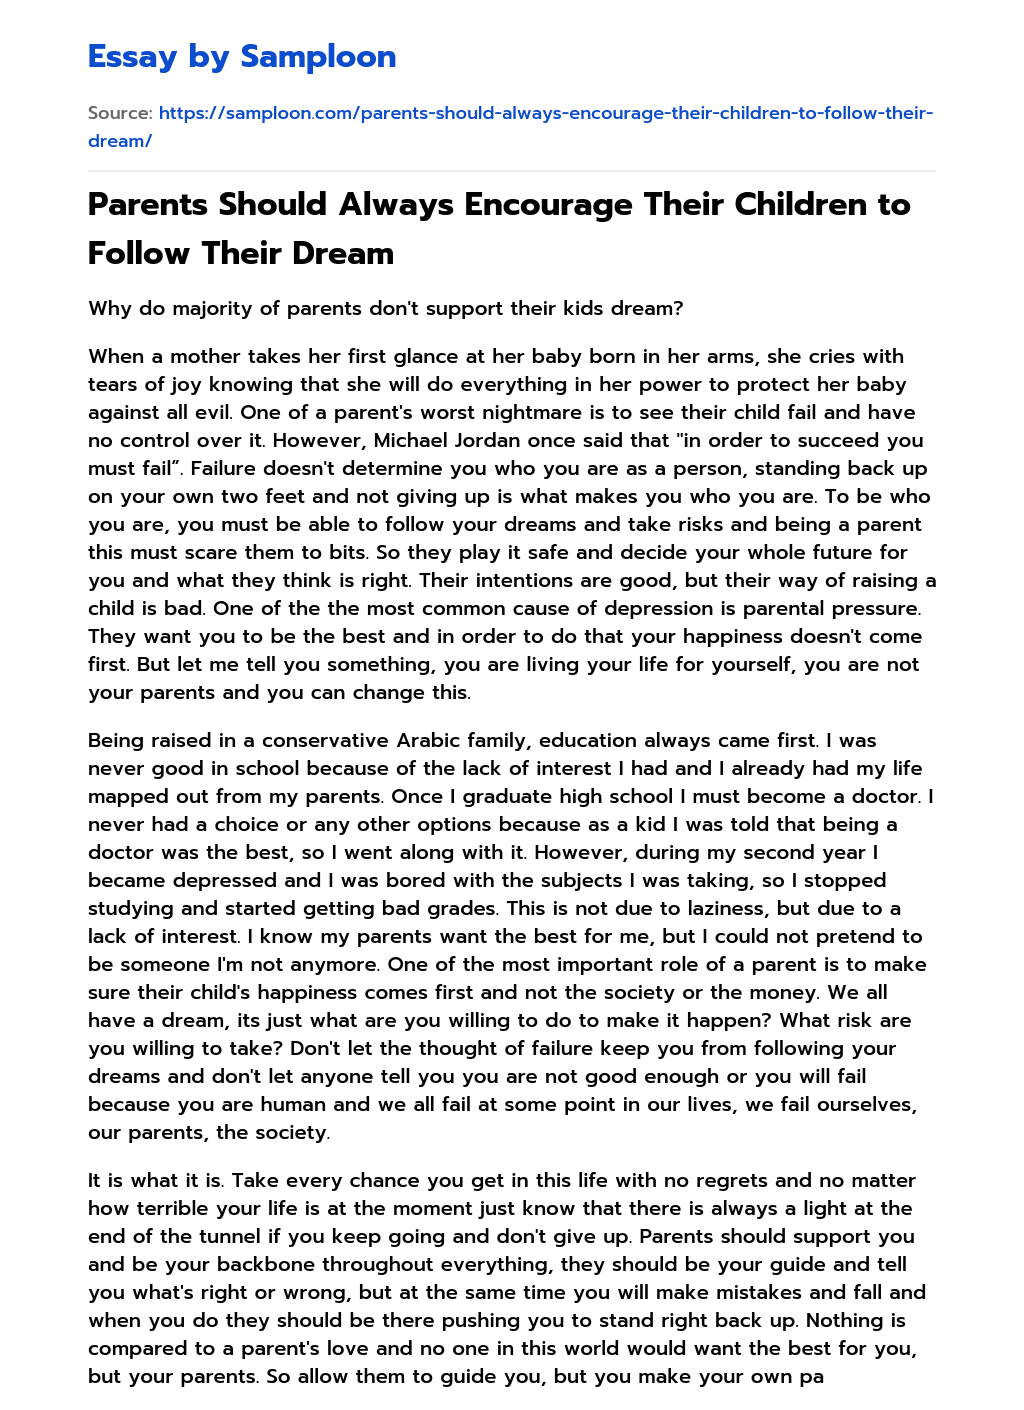 Parents Should Always Encourage Their Children to Follow Their Dream essay